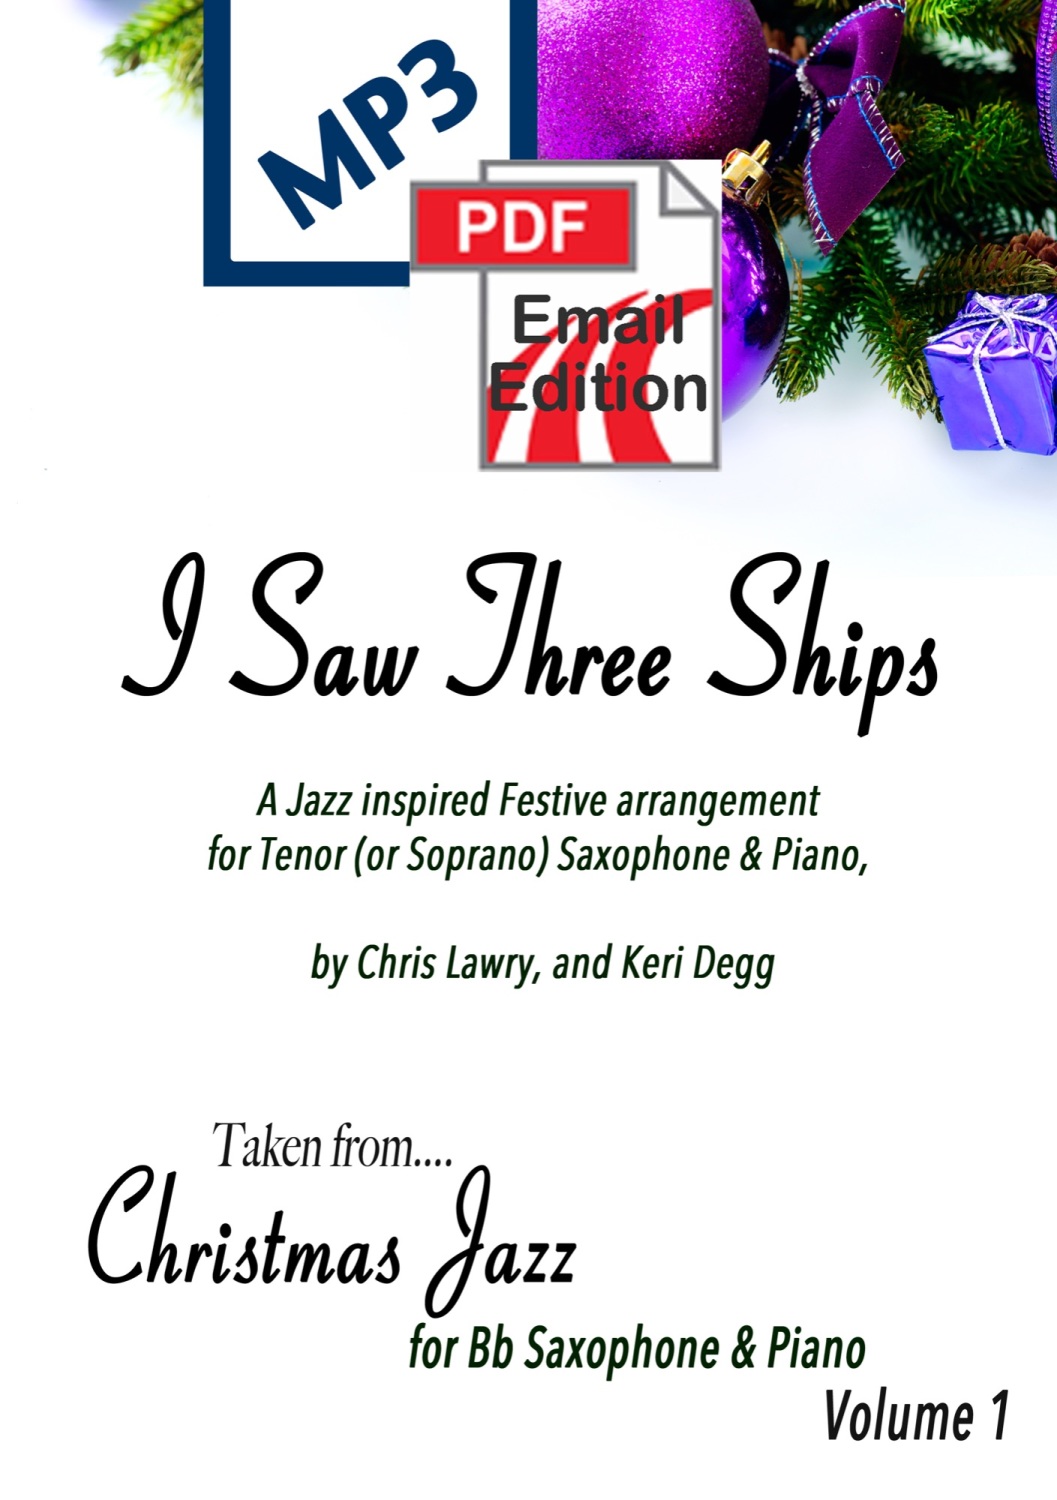 I Saw Three Ships. Christmas Jazz inspired arrangement Tenor (or Sop) Sax &